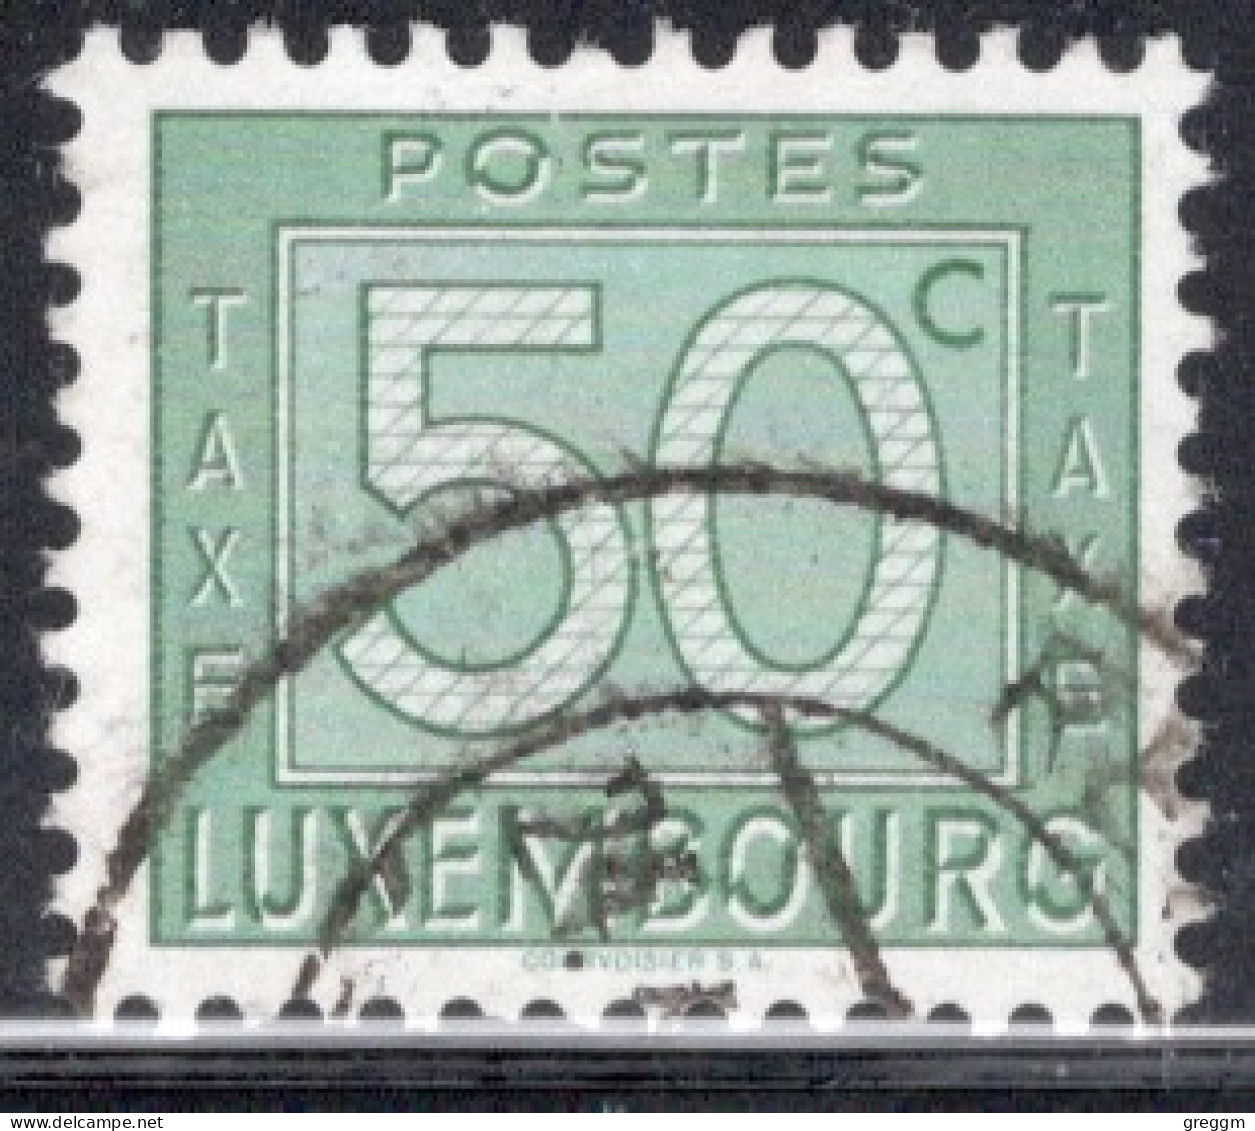 Luxembourg 1946 Single Numeral Stamps - New Design  In Fine Used - Portomarken